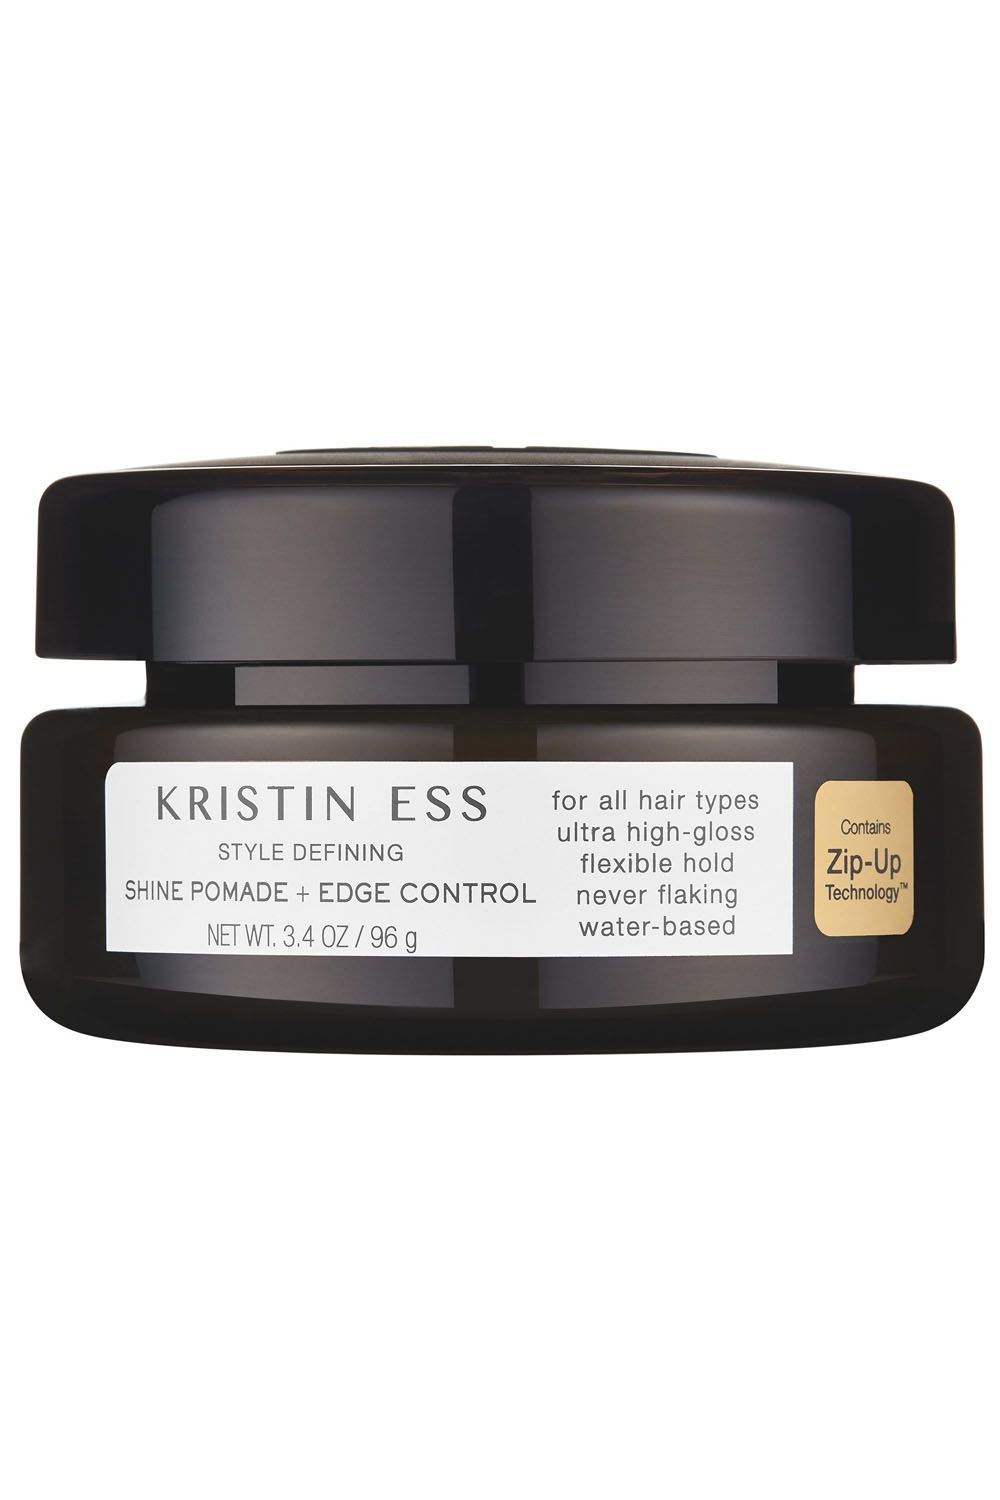 Kristin Ess Style Defining Shine Pommade + Edge Control